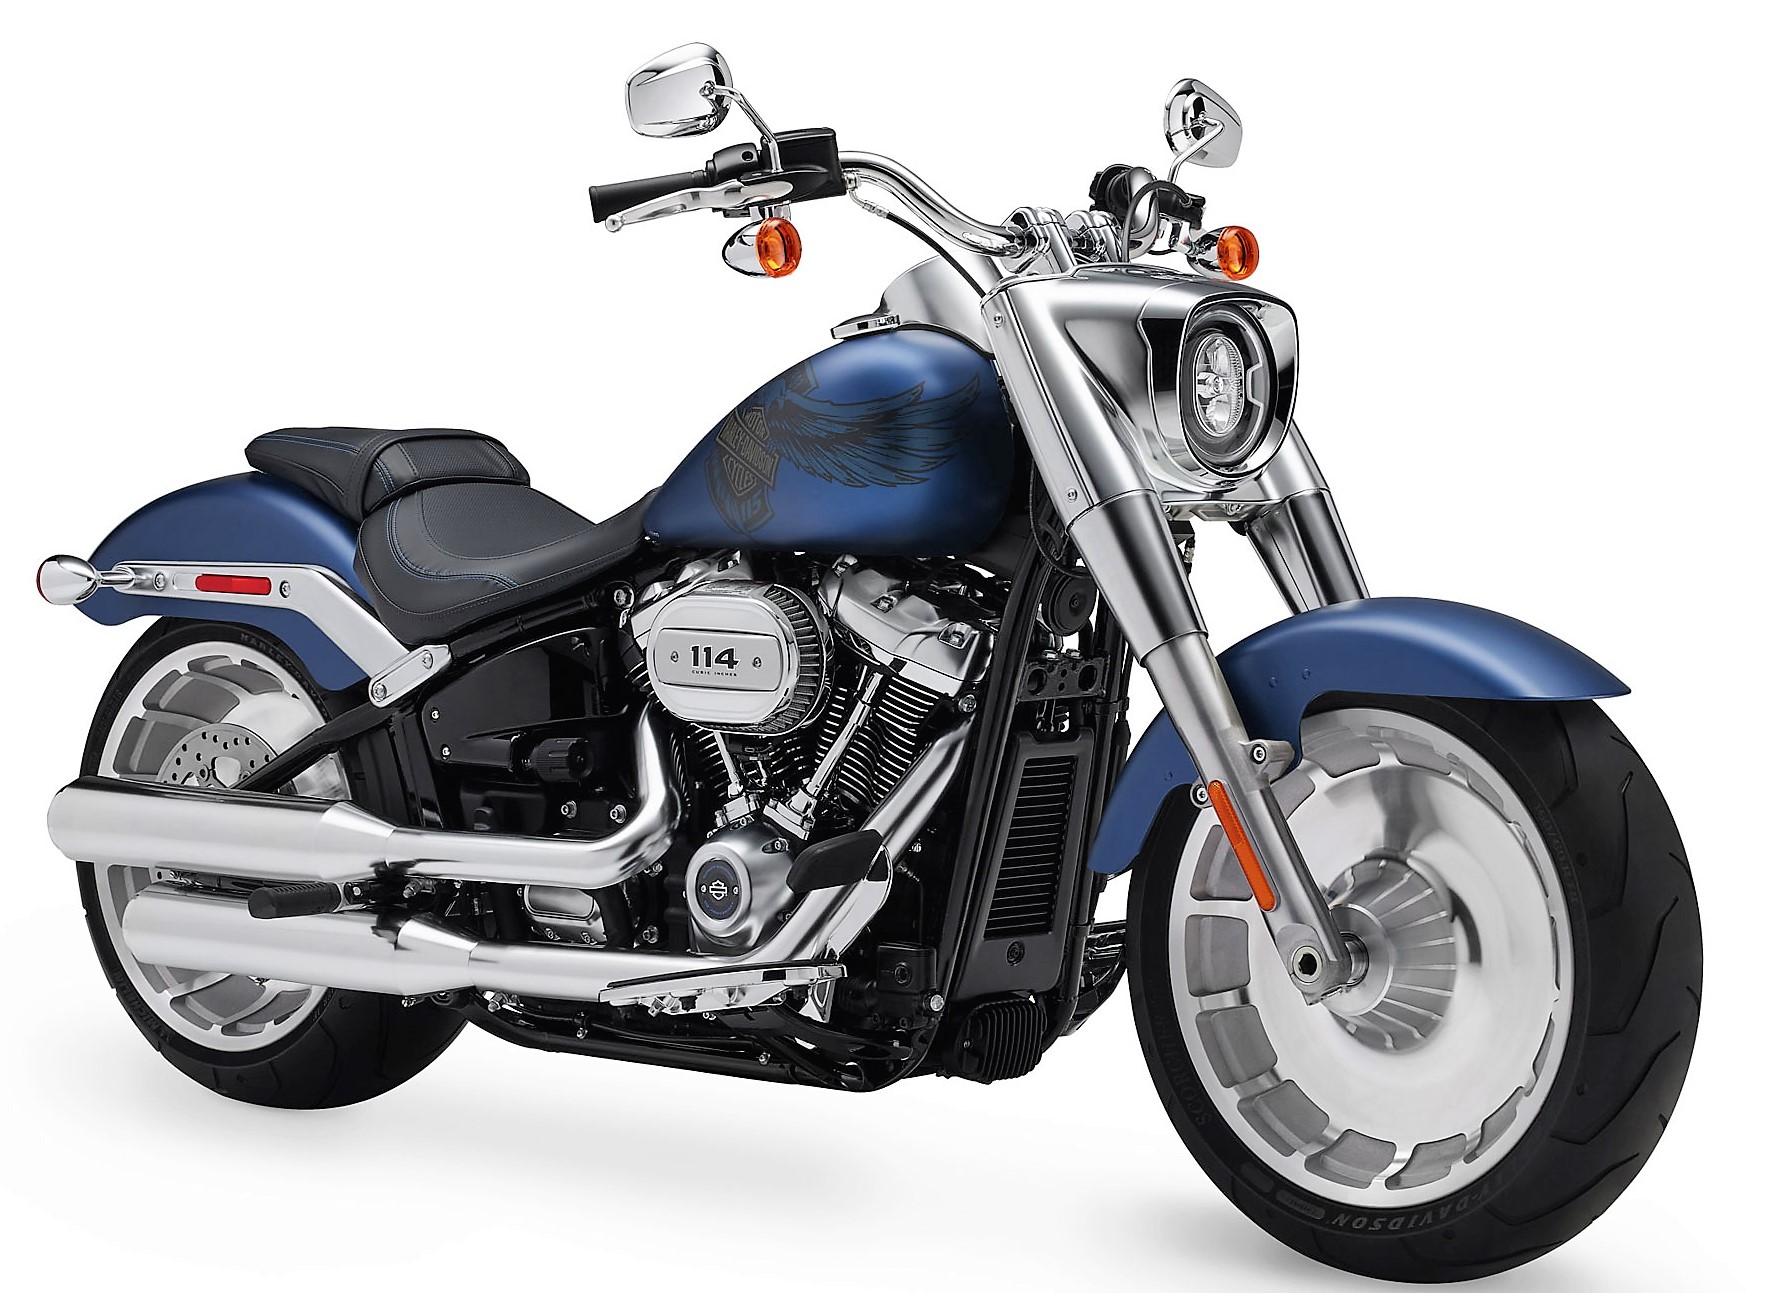 Hero MotoCorp to Sell and Service Harley-Davidson Bikes